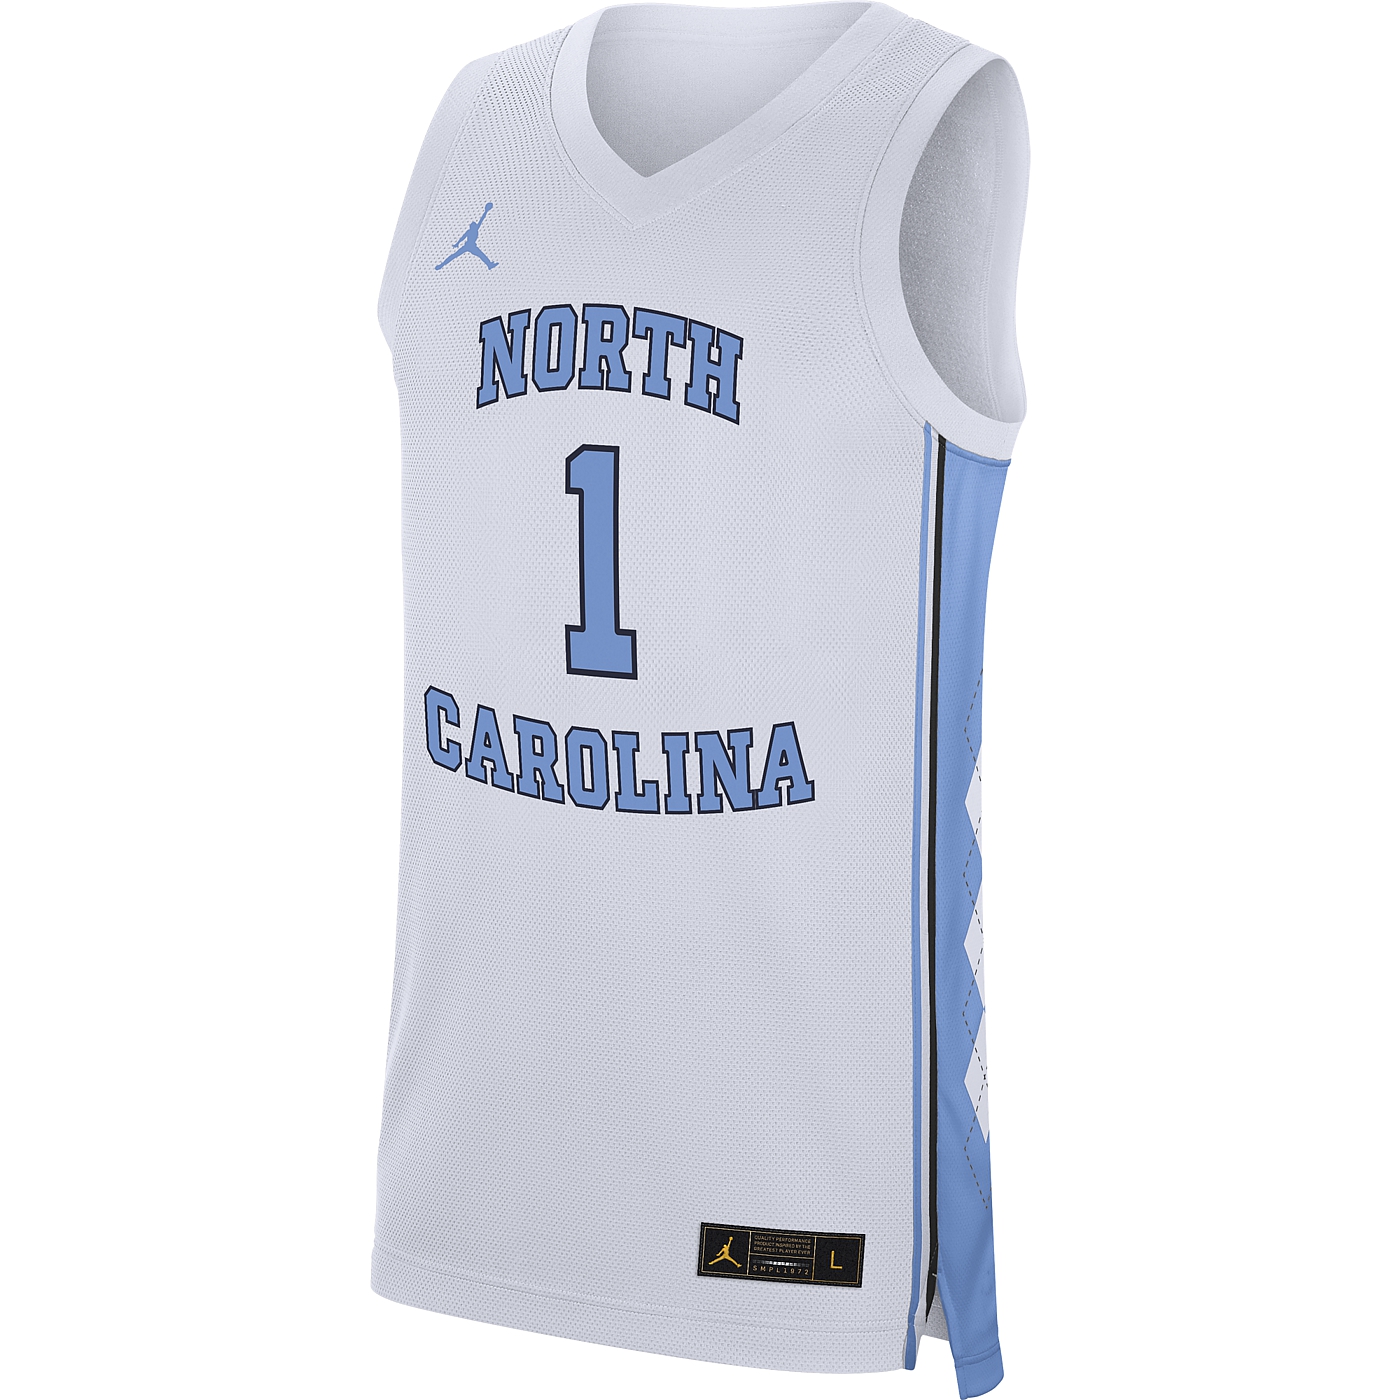 Johnny T-shirt - North Carolina Tar Heels - Nike Replica #1 Basketball (White) by Nike